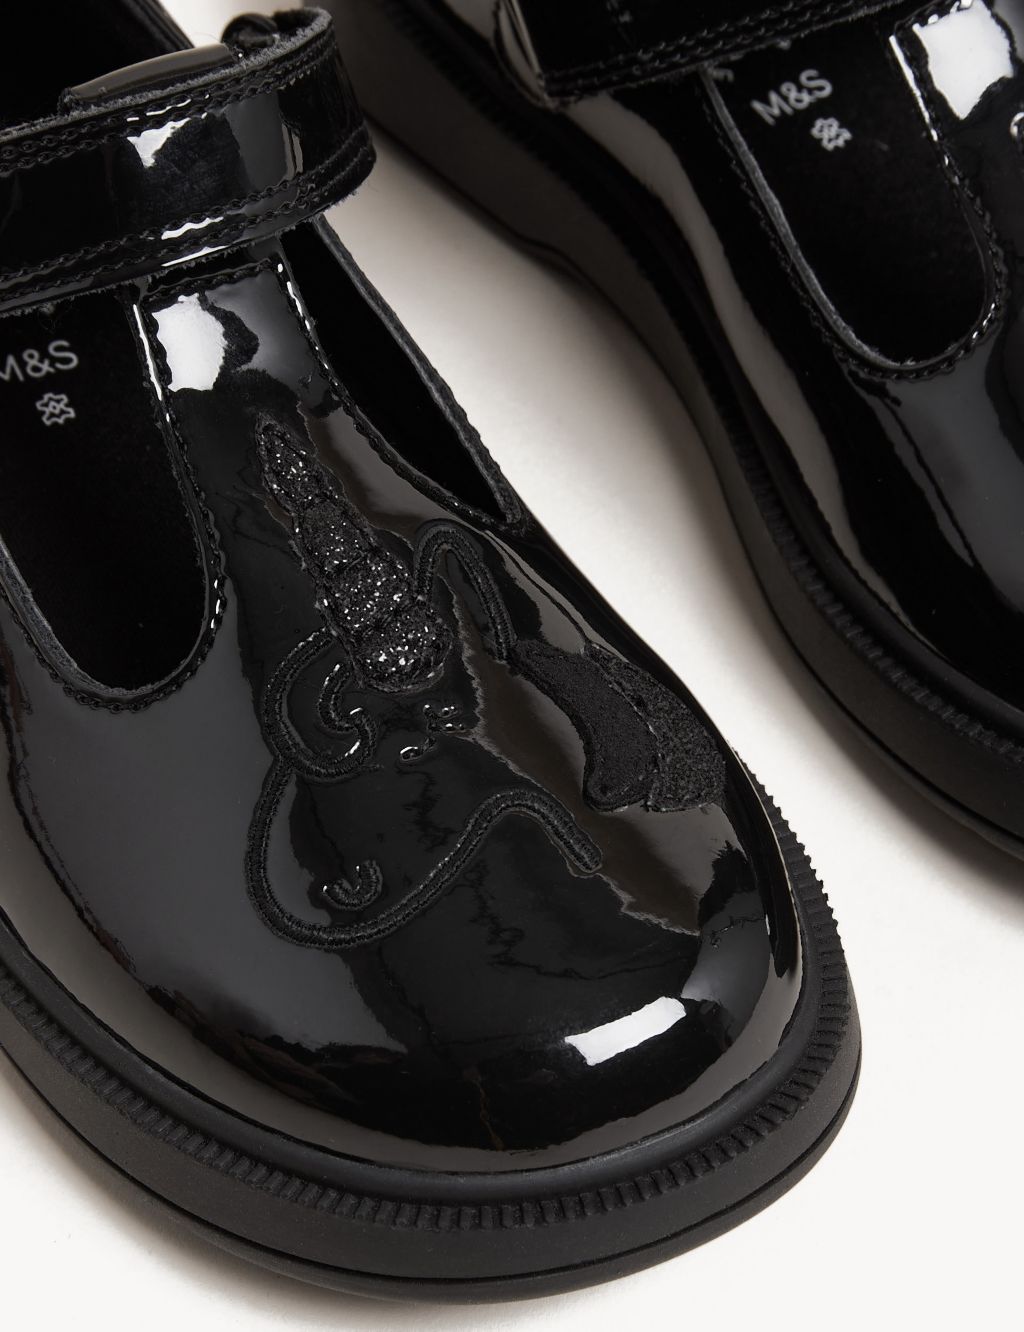 Kids' Leather Freshfeet™ Unicorn School Shoes (8 Small - 2 Large) image 3